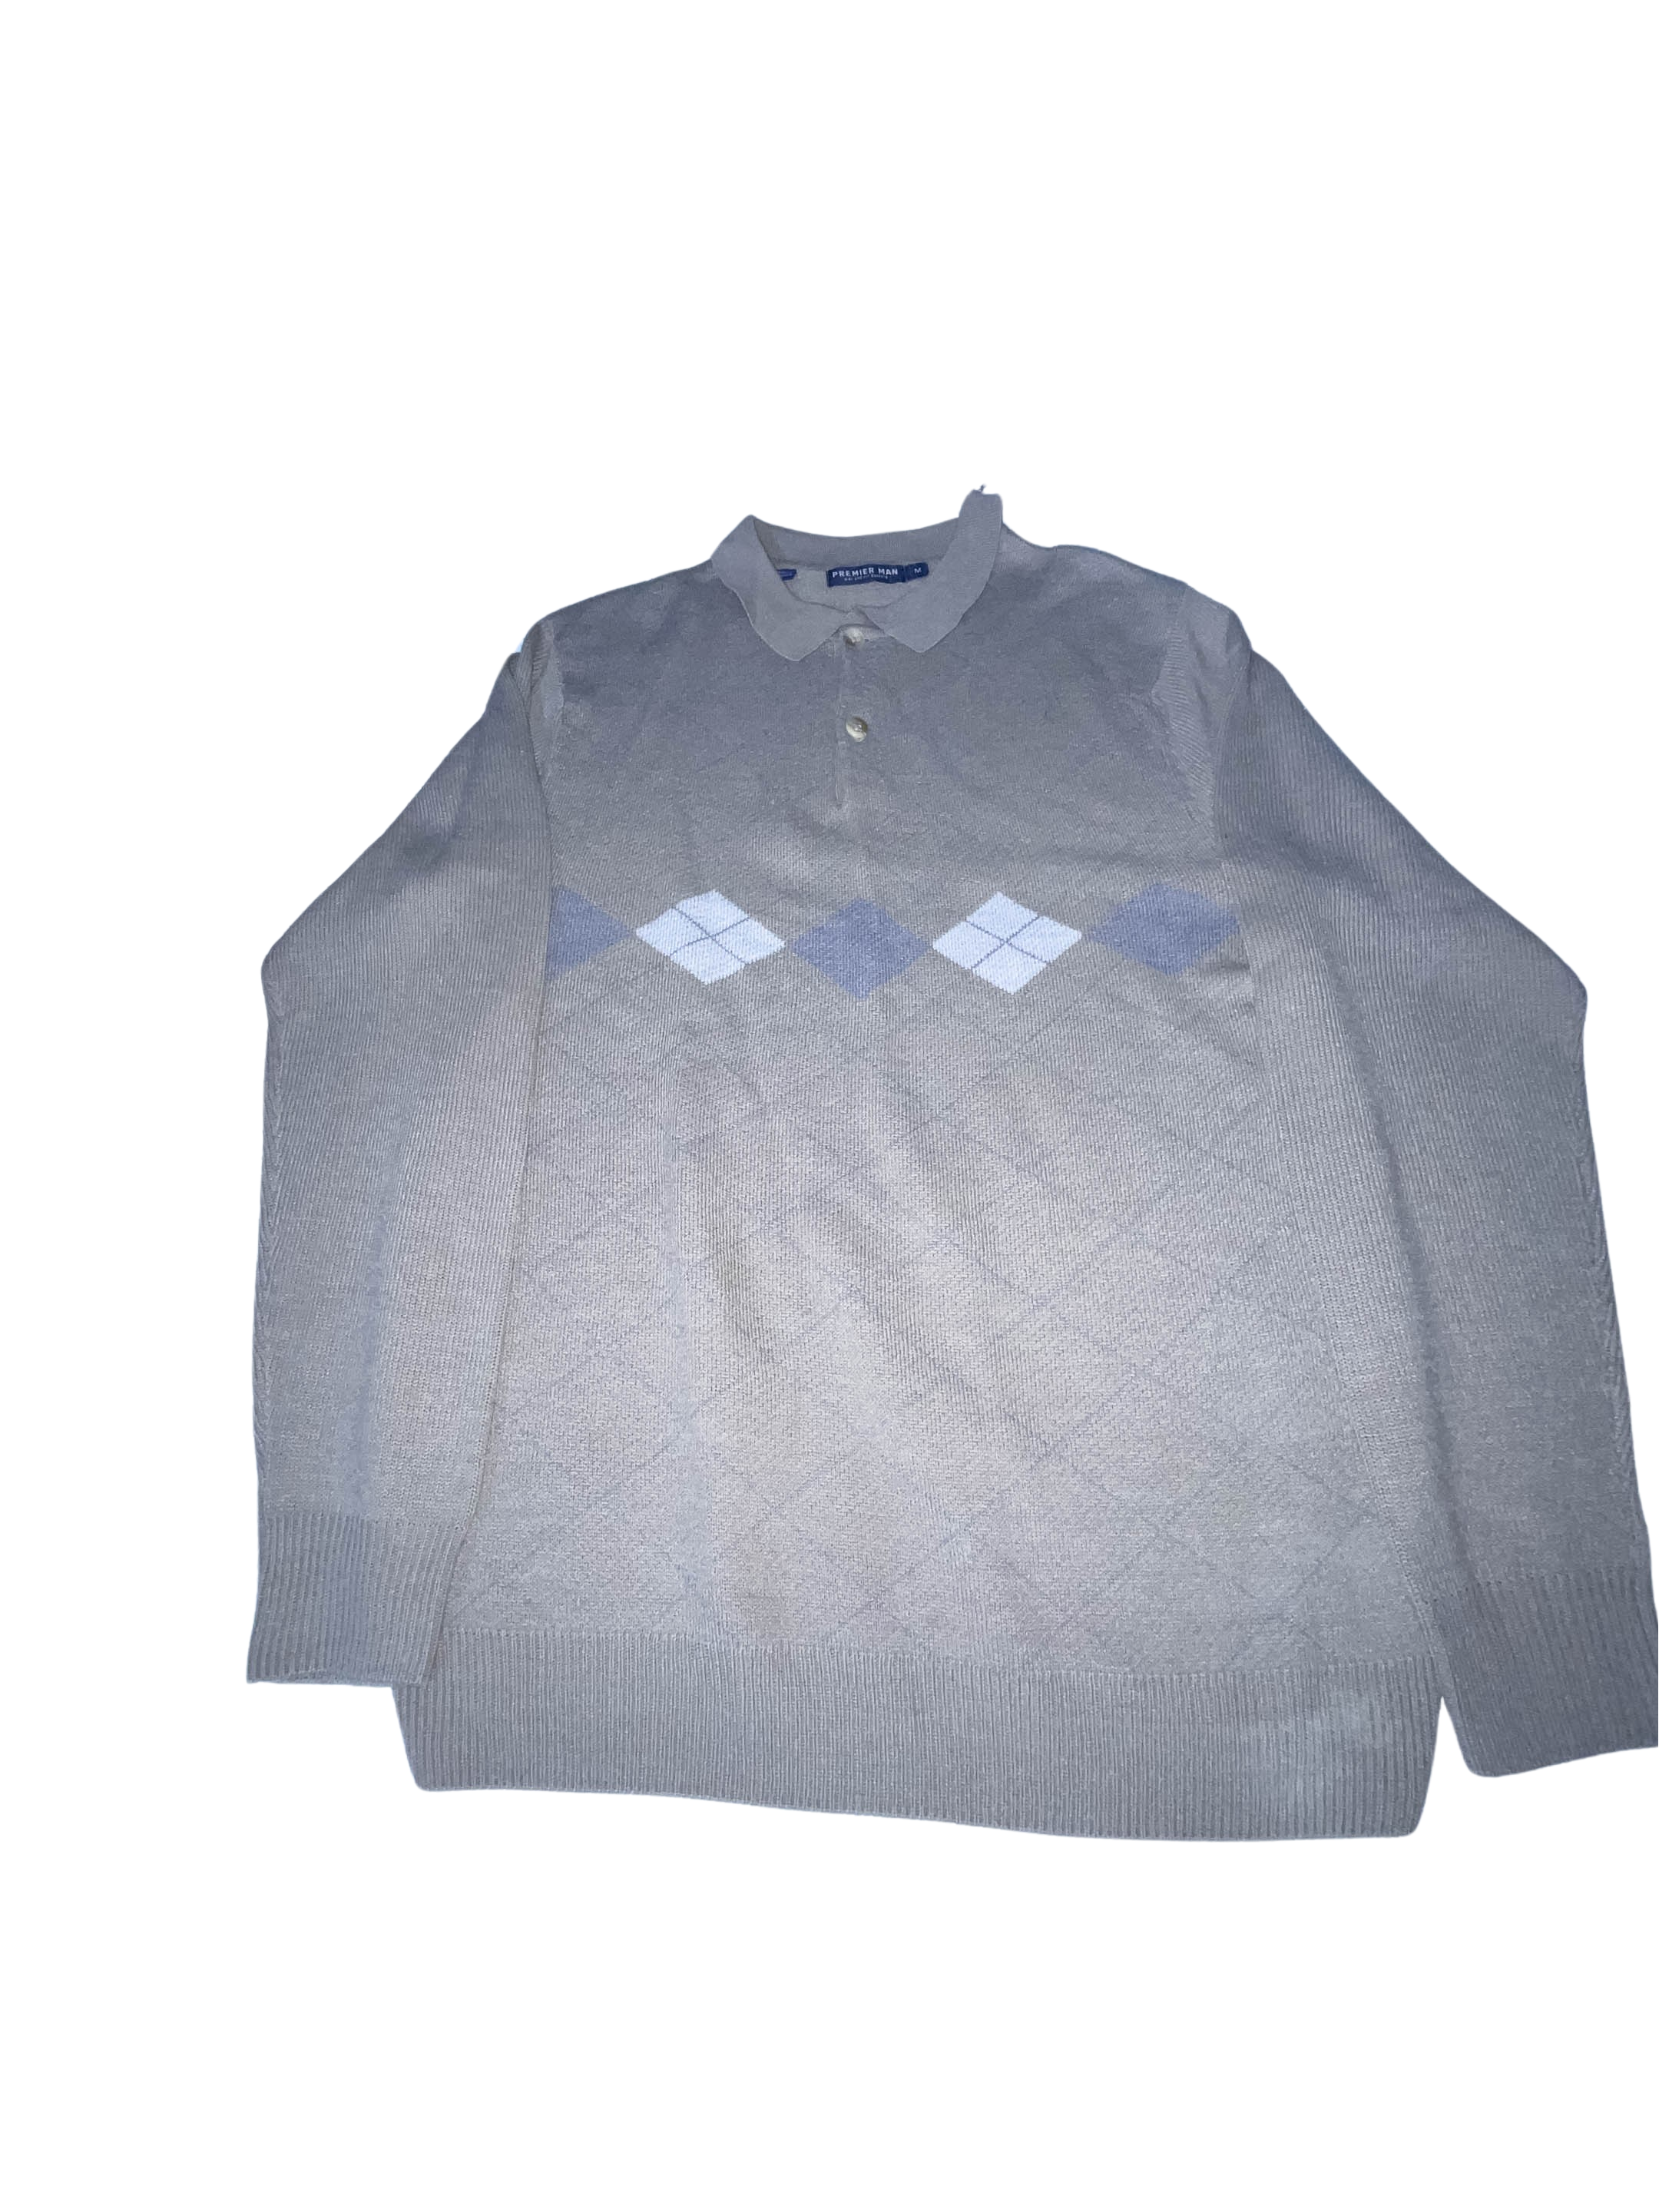 Vintage Premier man long sleeve patterned medium cream polo sweatshirt